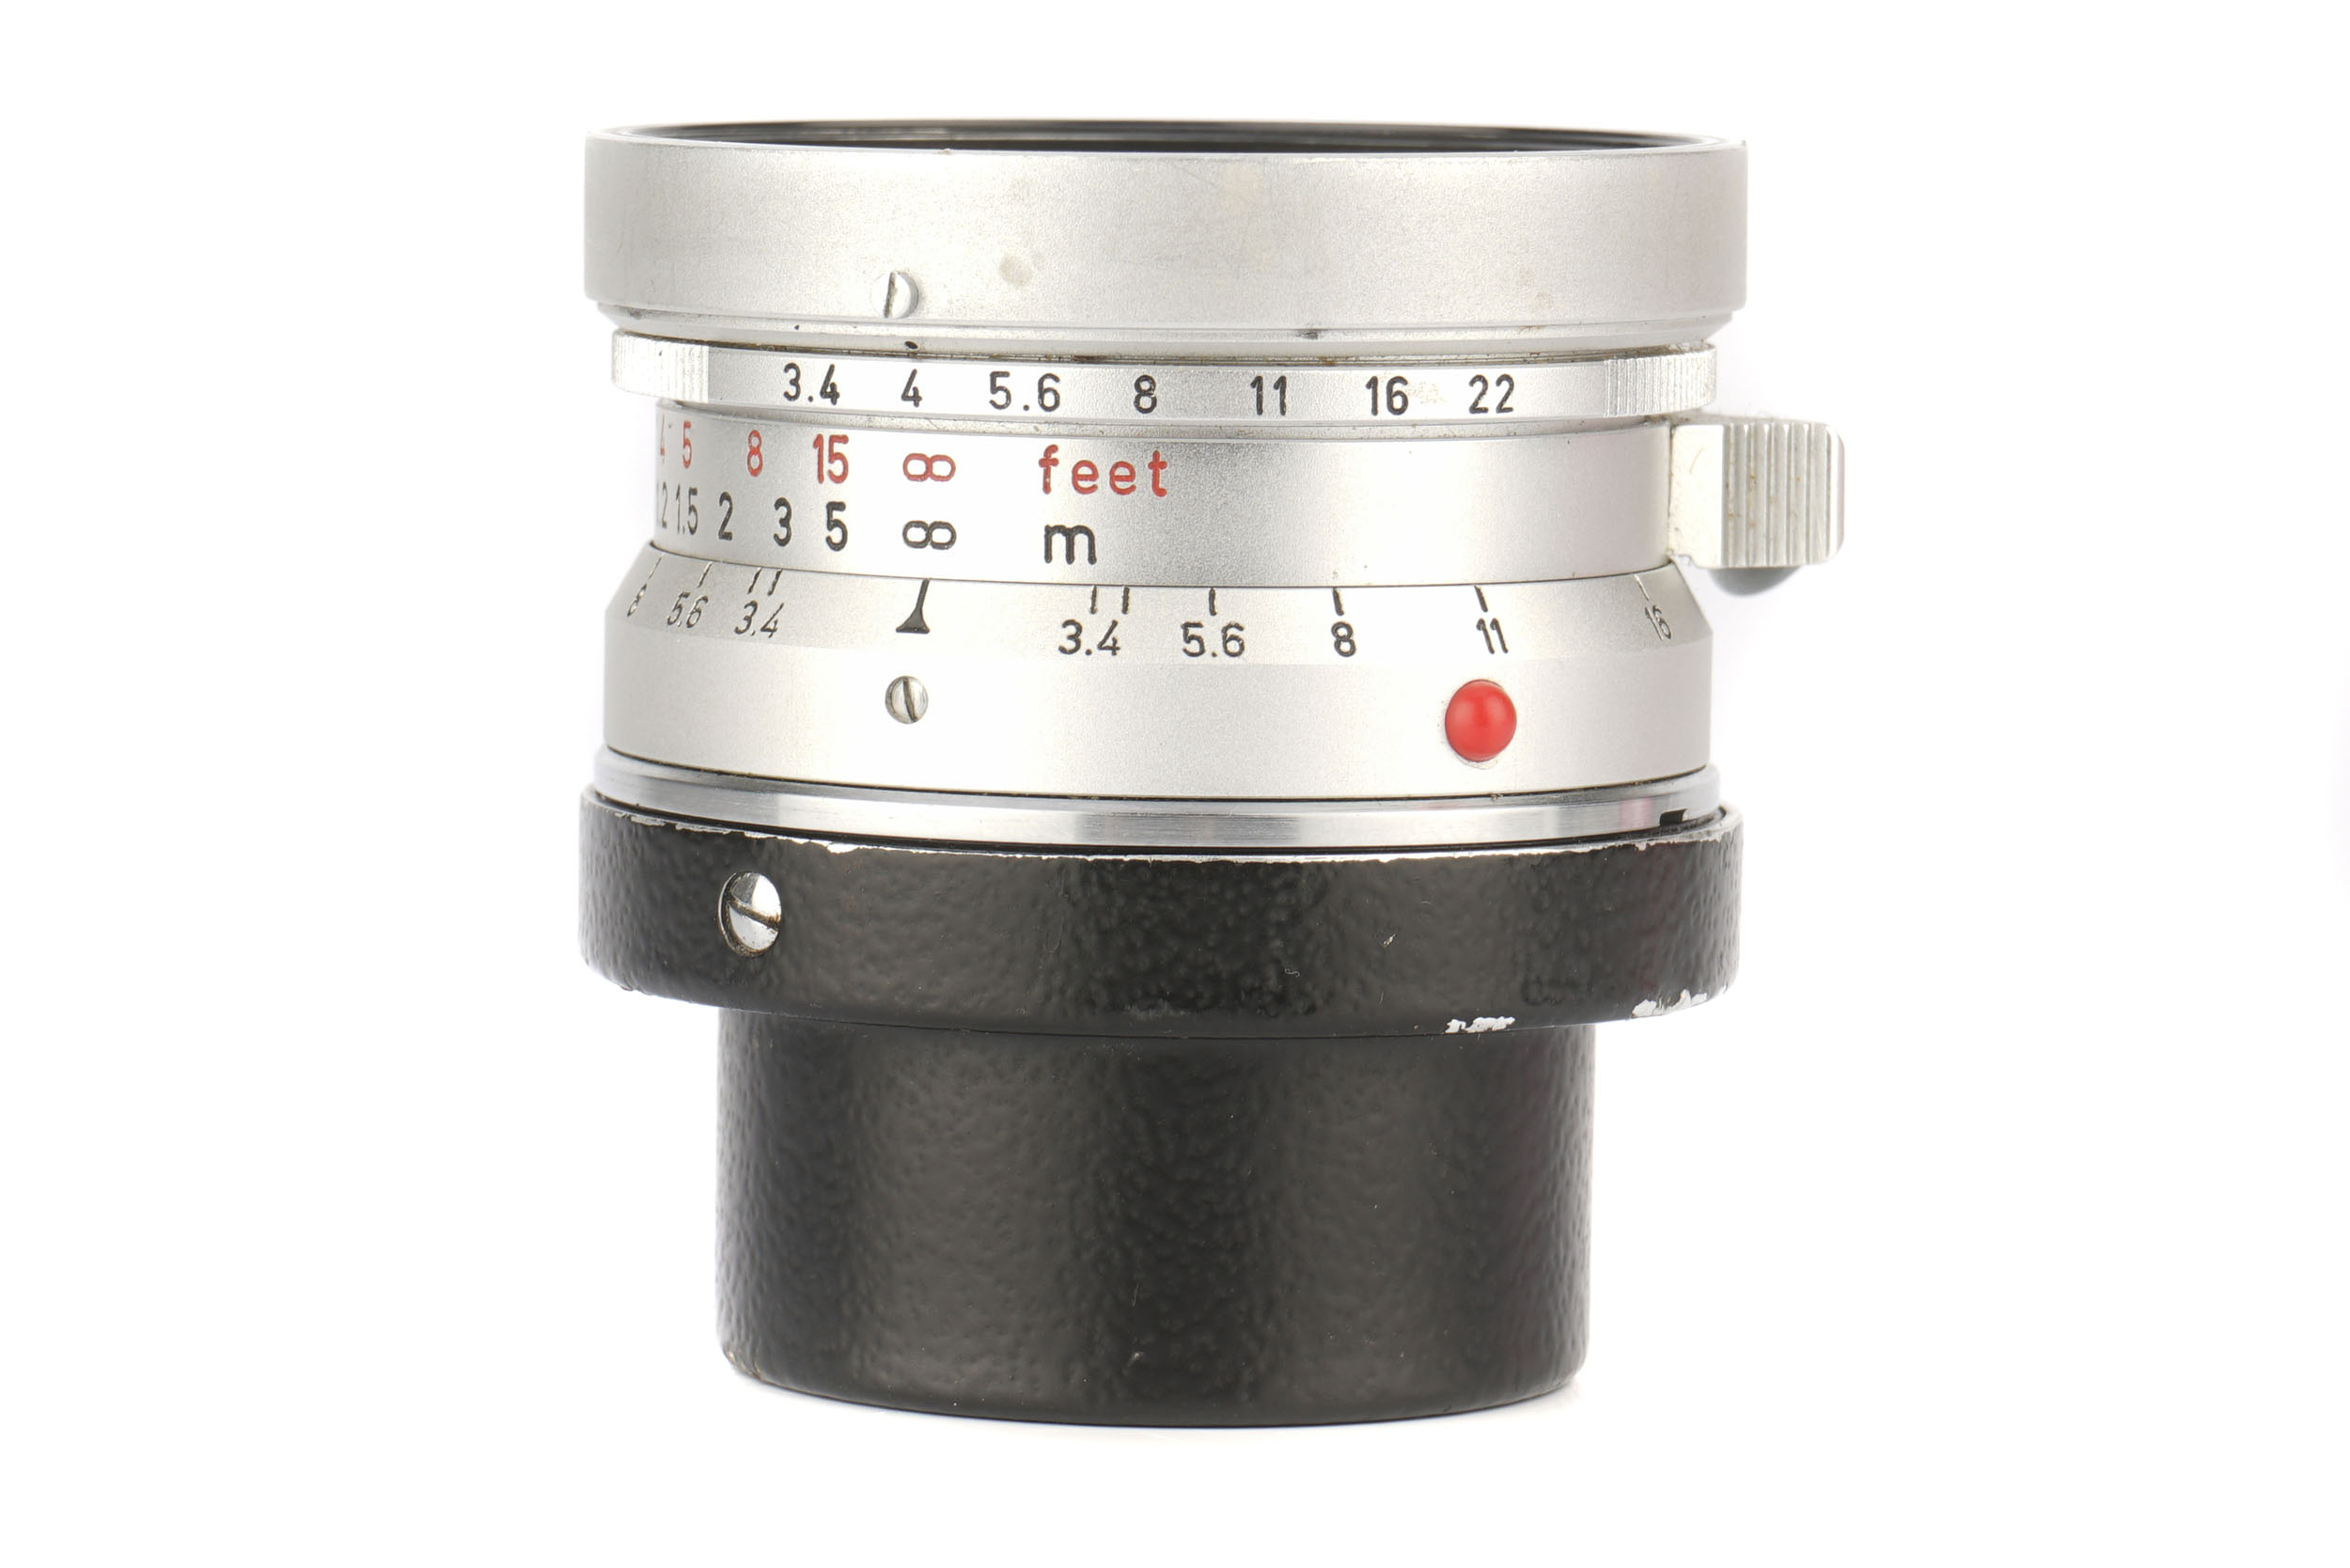 A Leitz Super-Angulon f/3.4 21mm Lens, - Image 2 of 3